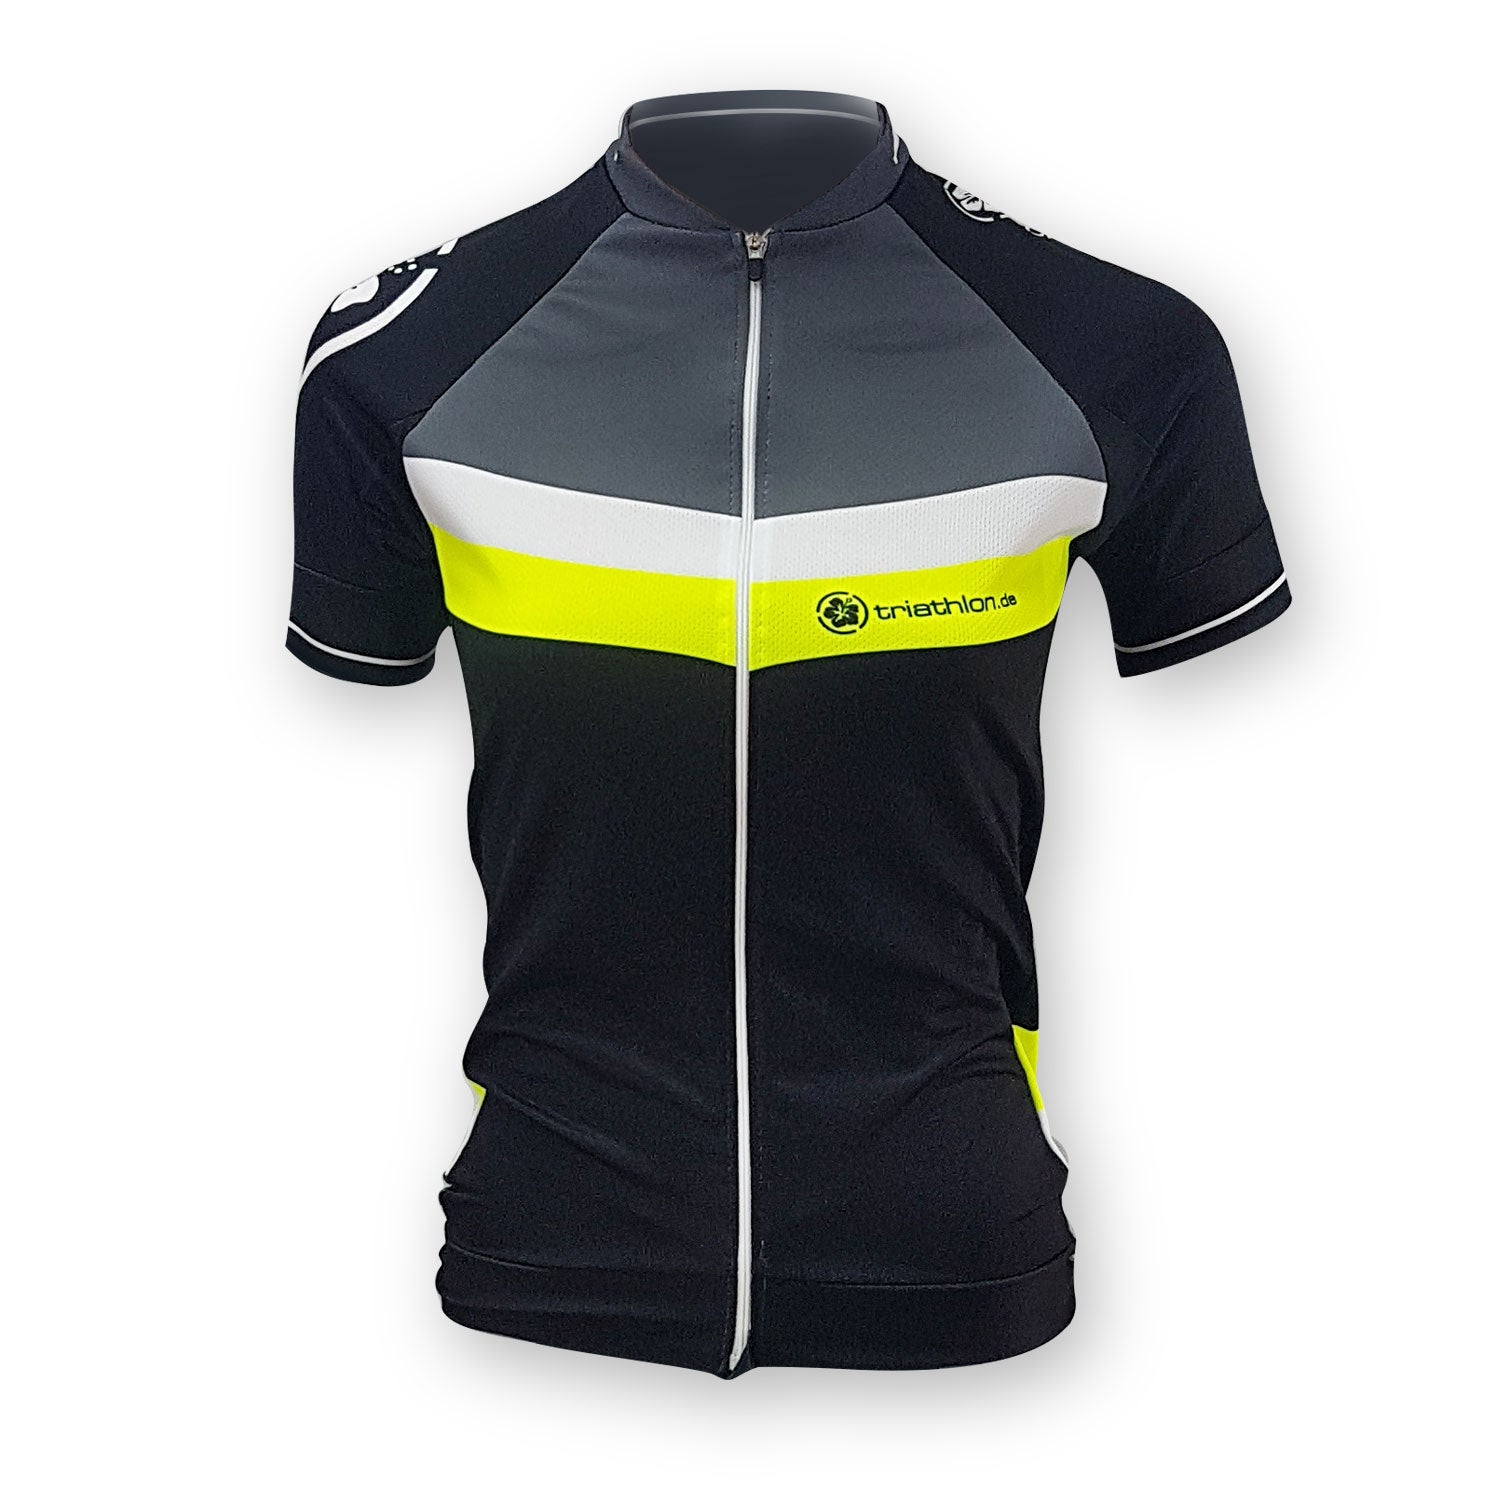 triathlon.de elite cycling jersey, women, black/grey/yellow